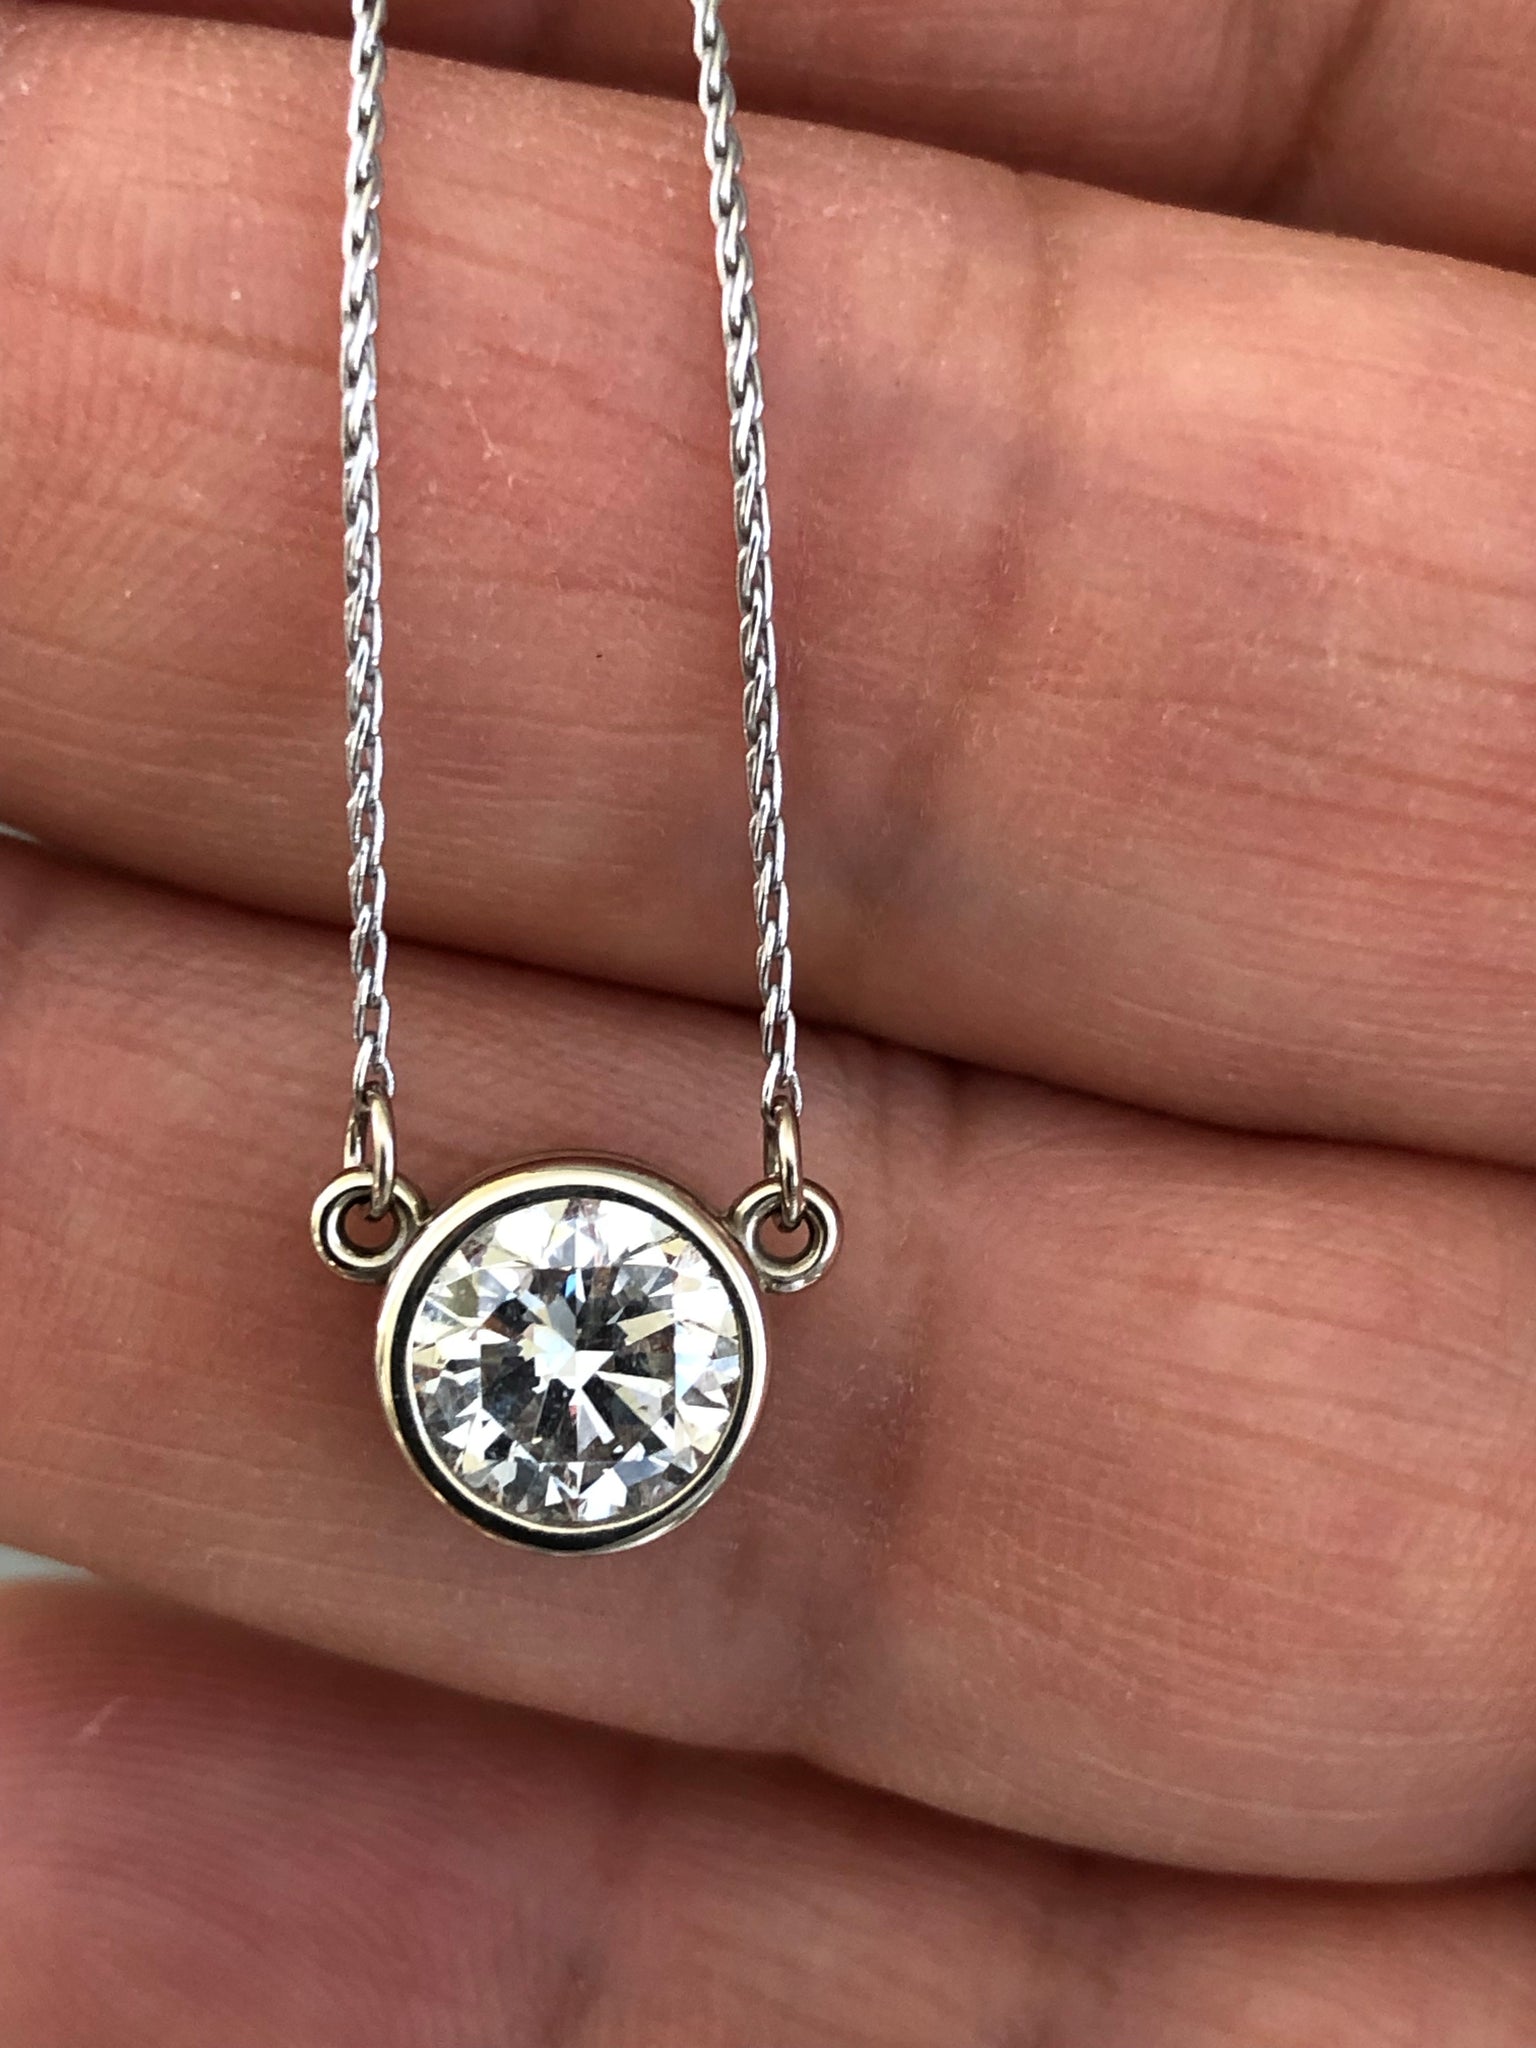 1.50 Carat Round Diamond Solitaire White Gold Pendant Necklace